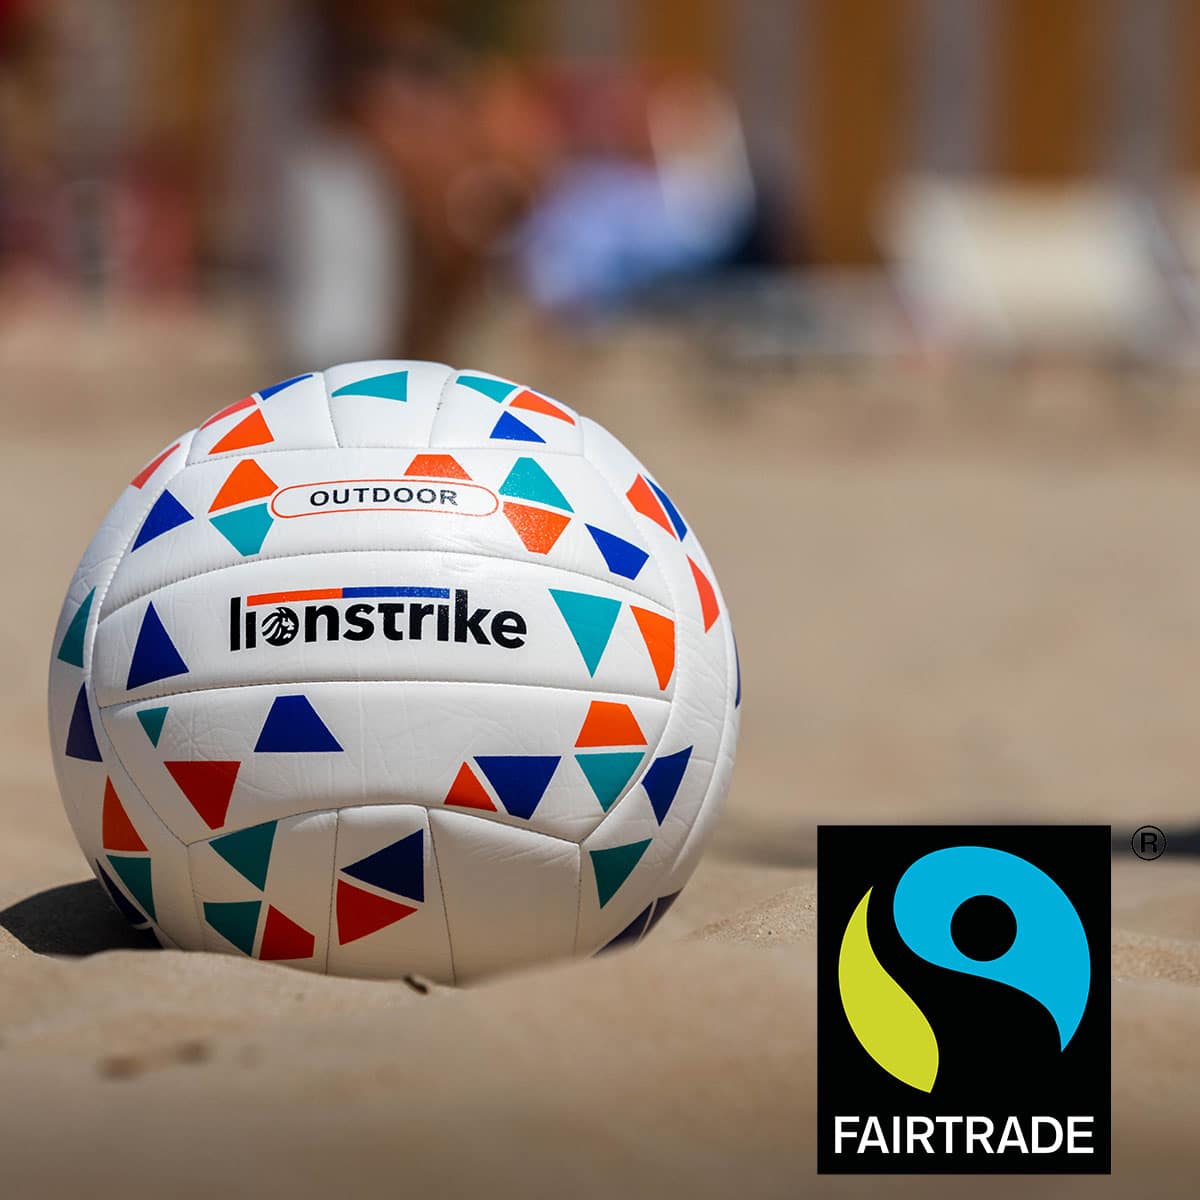 Lionstrike Fairtrade Outdoor Volleyball